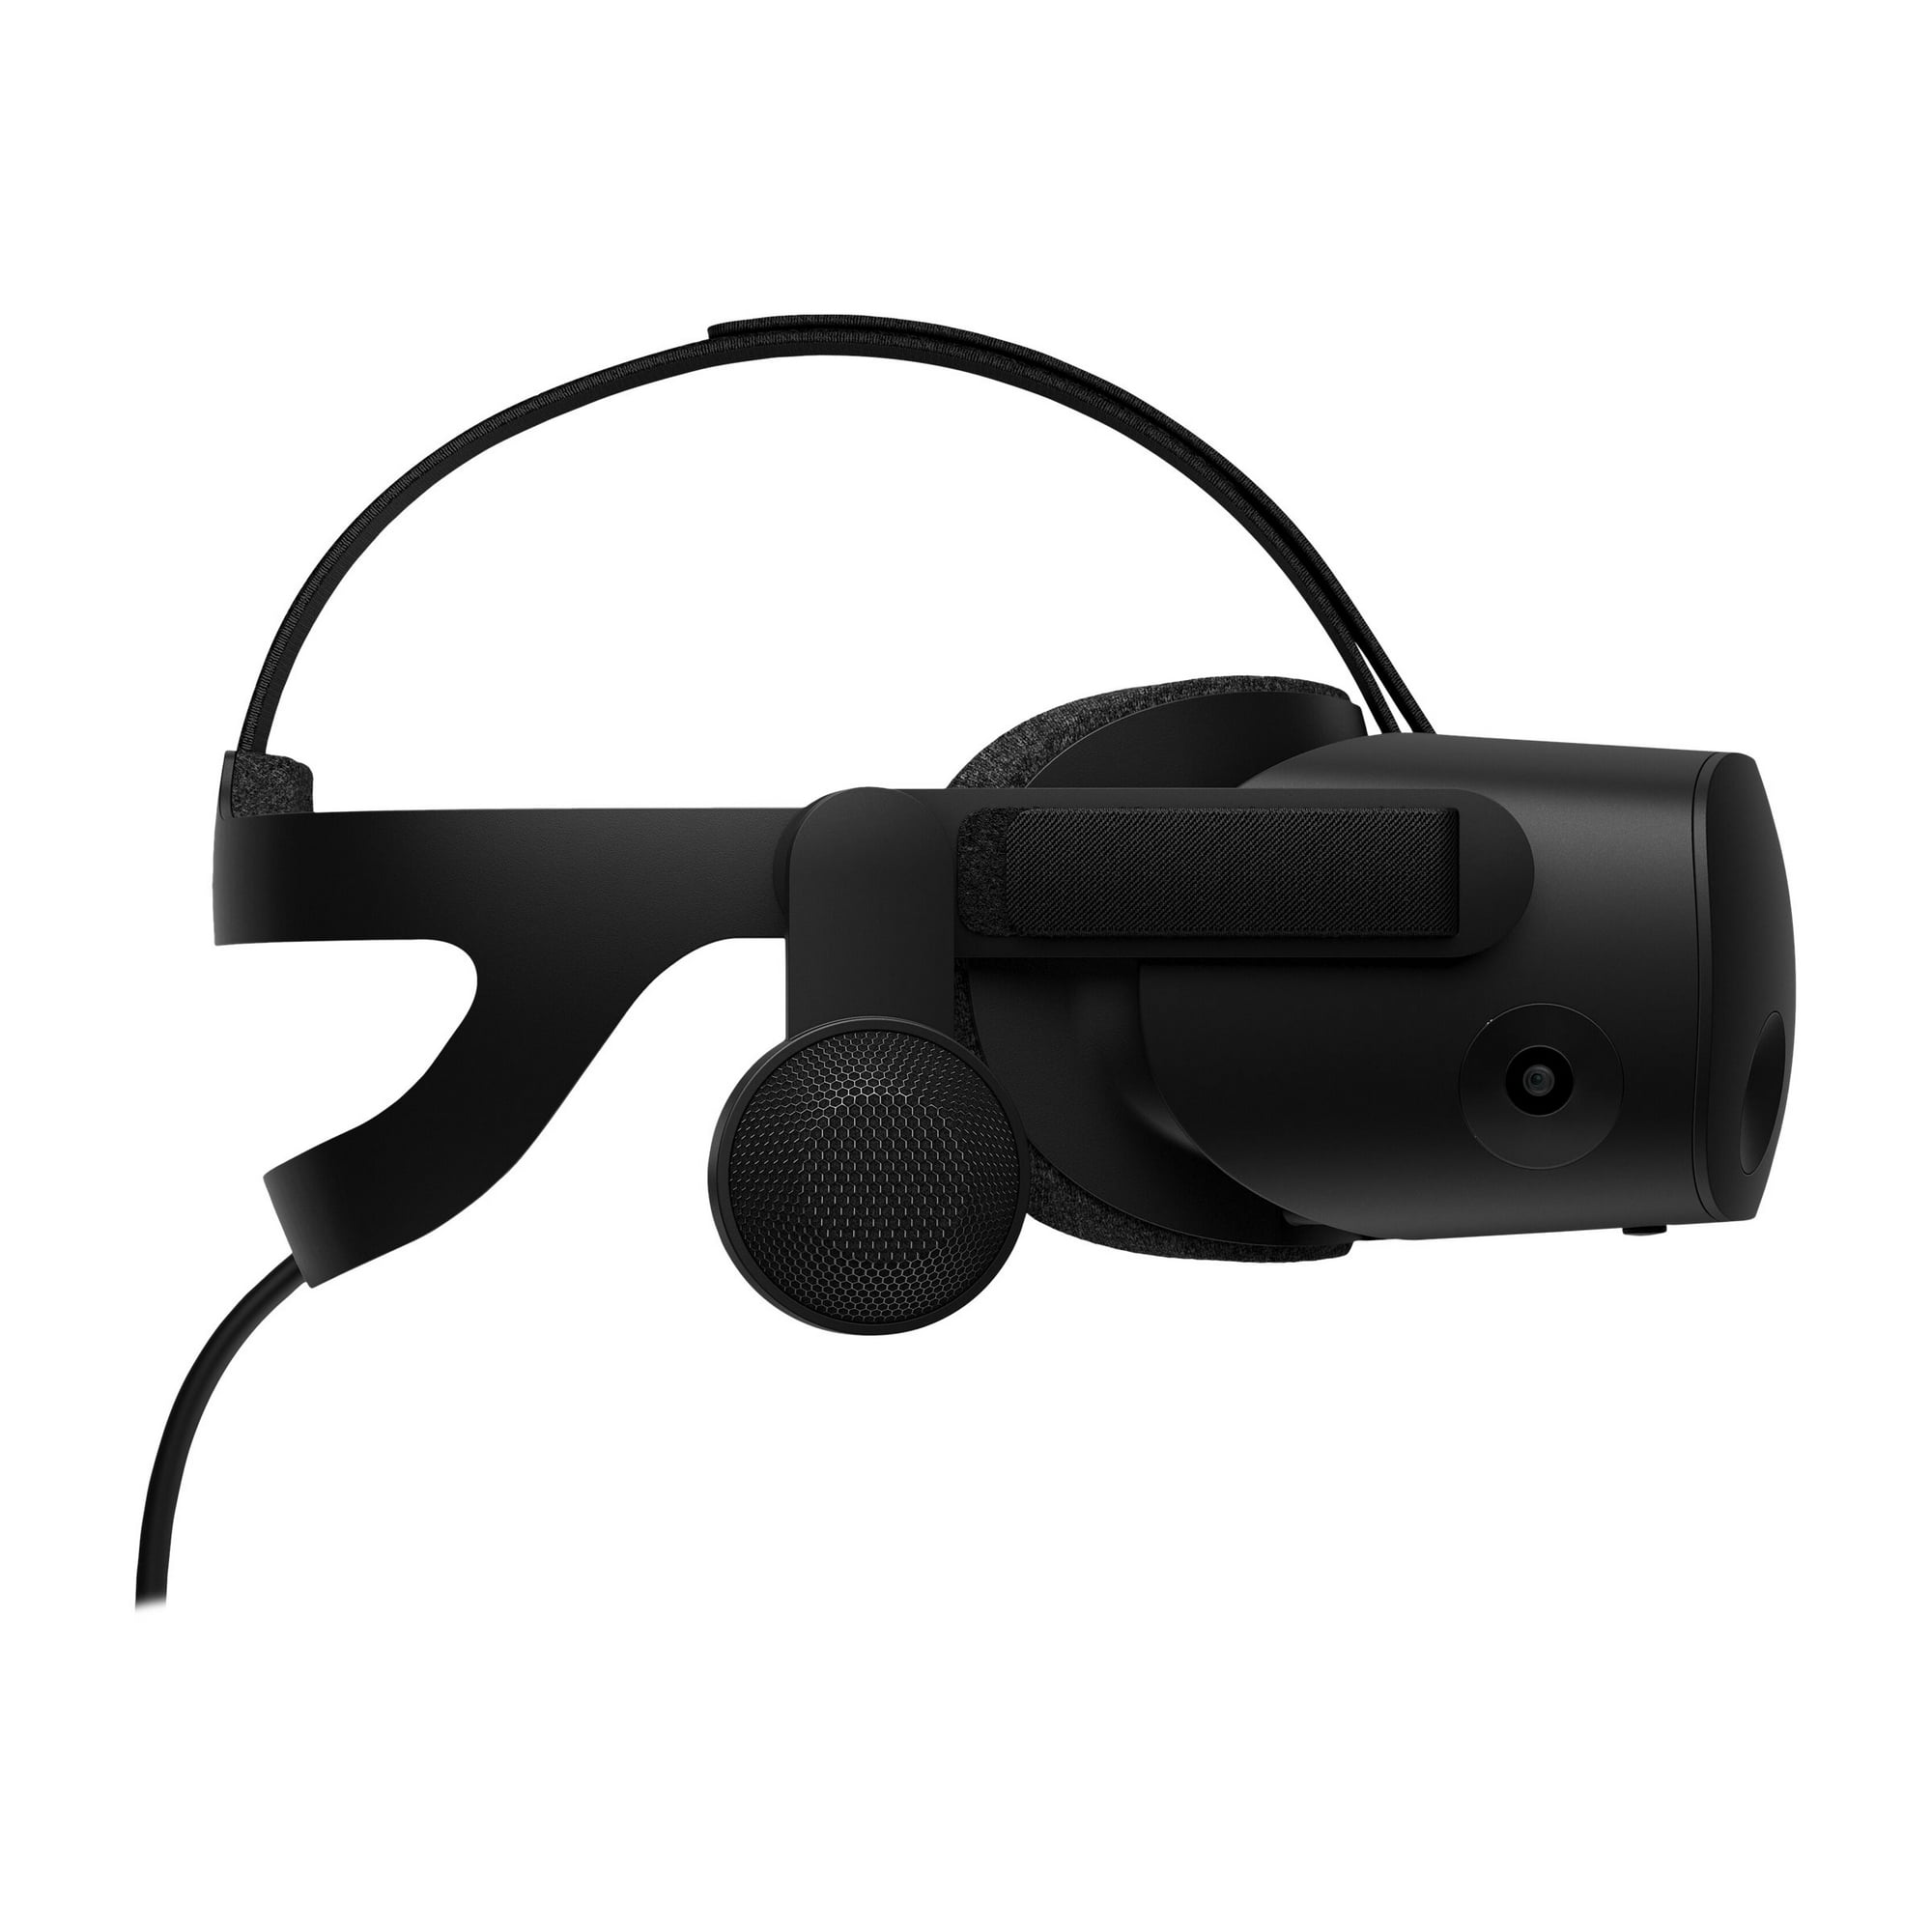 HP Reverb G2 - Virtual reality system - 2.89